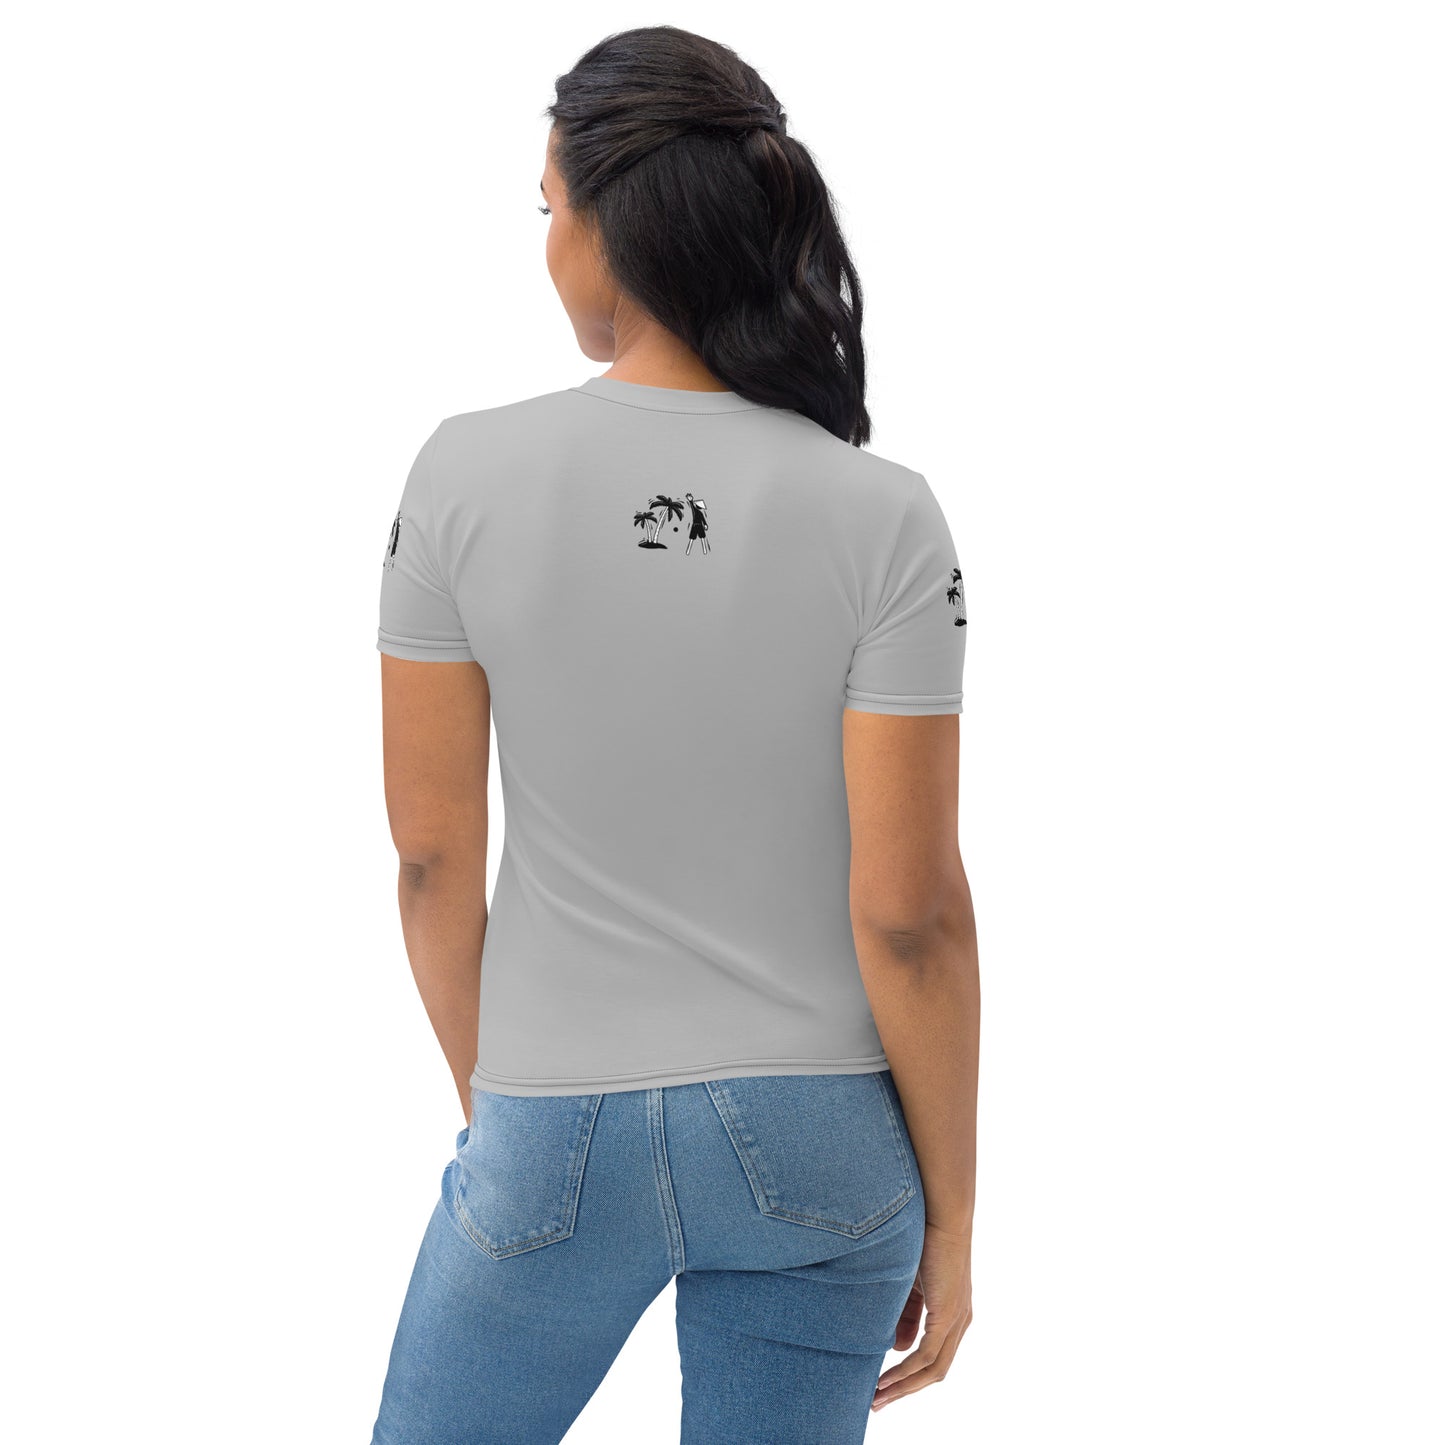 Gray V.Localized (Black/White) Women’s Dry-Fit T-Shirt